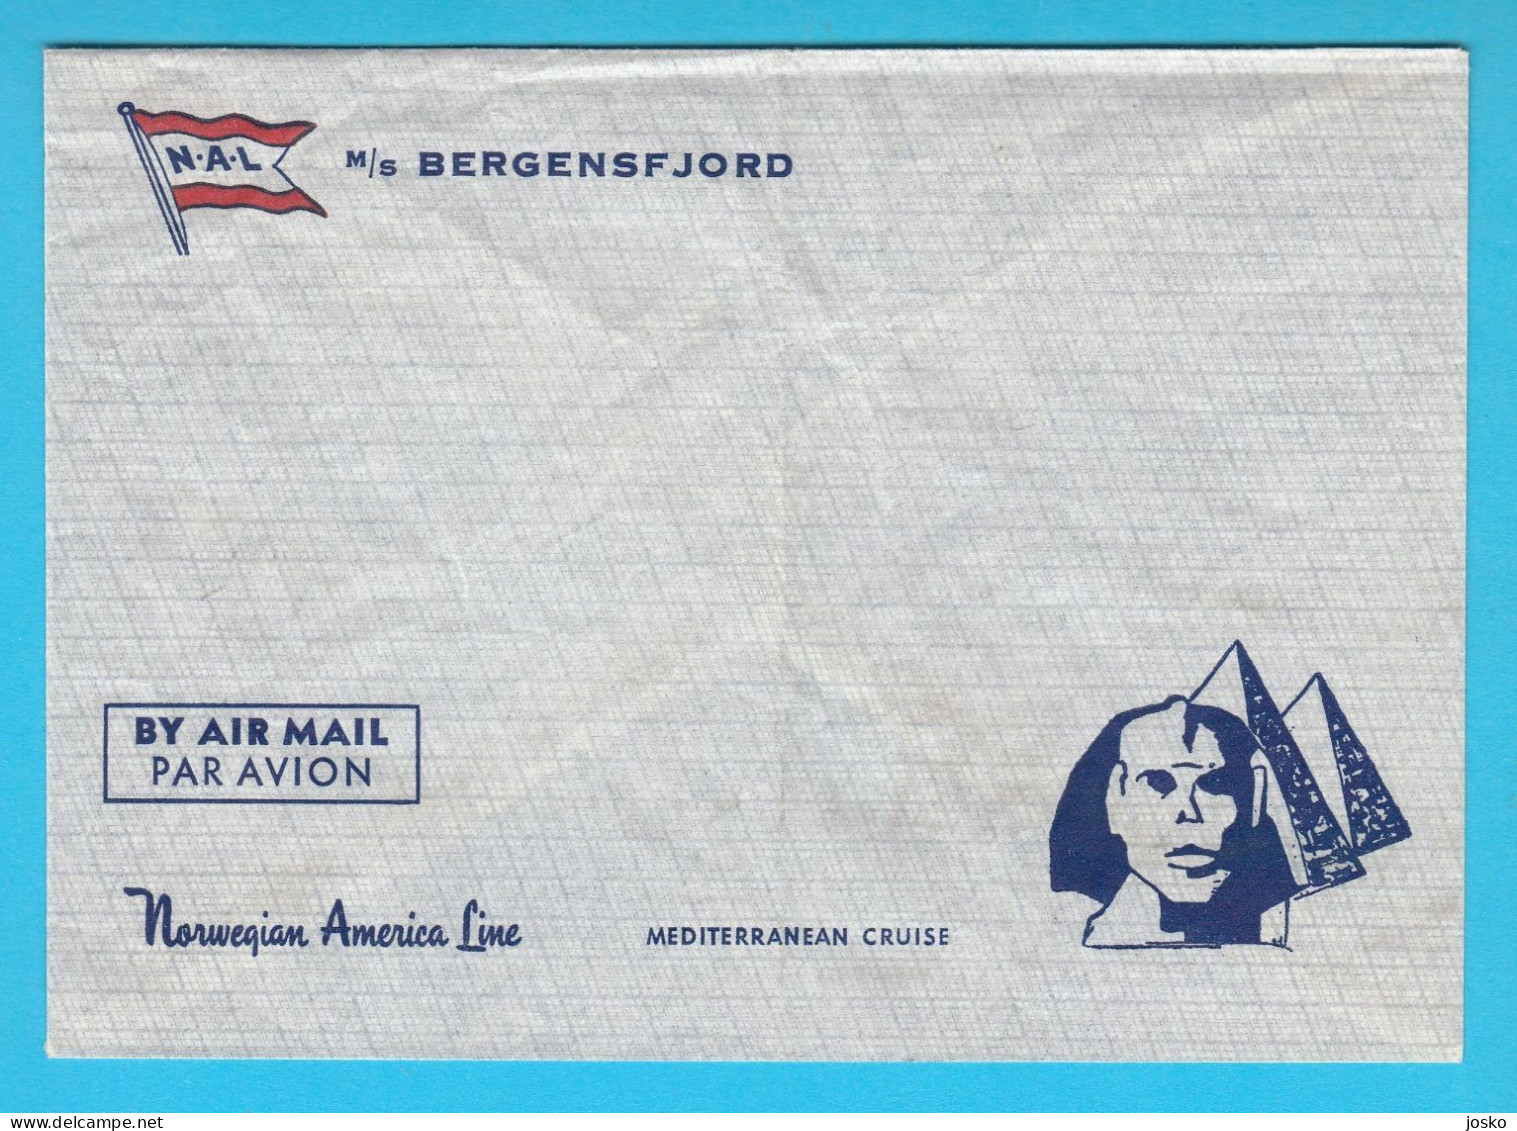 NORWEGIAN AMERICA LINE (Den Norske Amerikalinje) Ship M/S BERGENSFJORD * By Air Mail * Vintage Official Cover * Norway - Briefe U. Dokumente